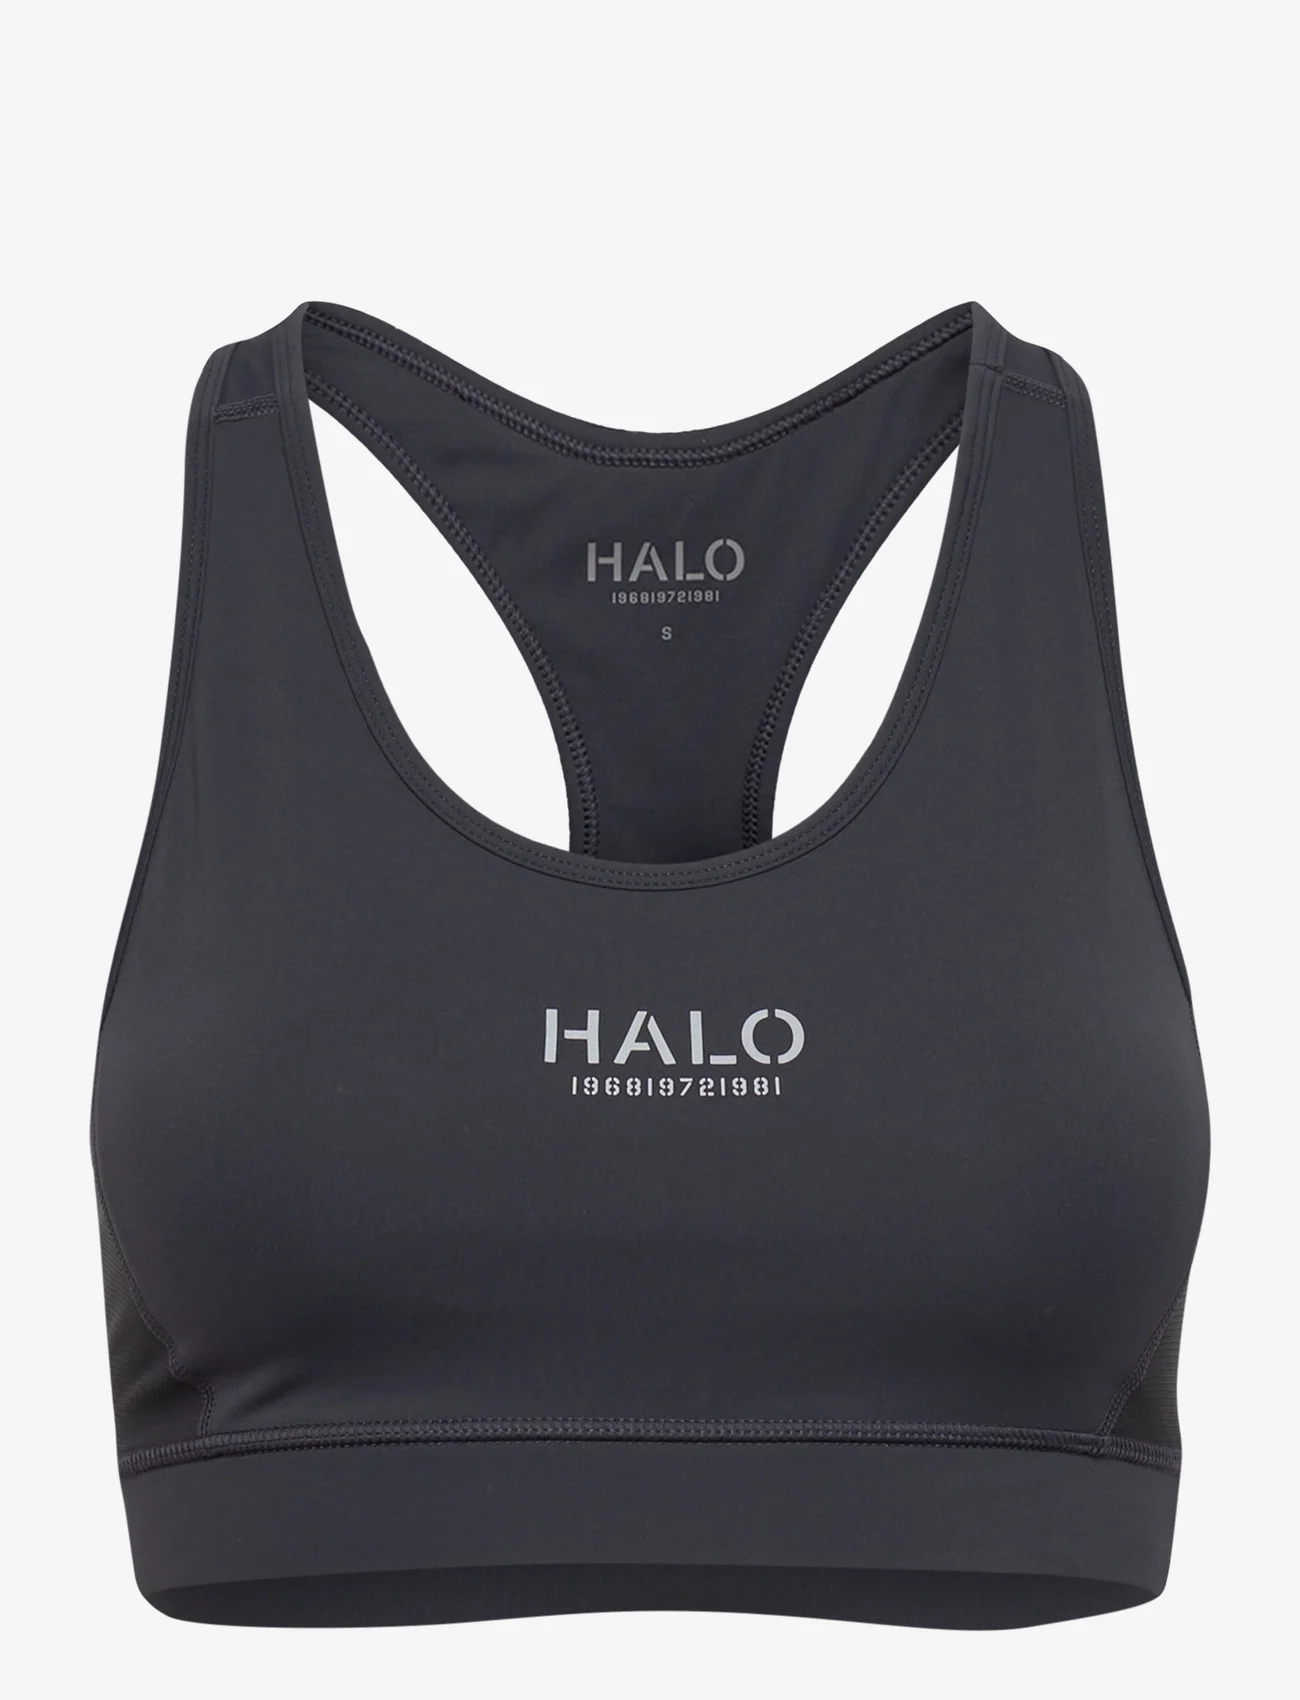 HALO - HALO WOMENS BRATOP - sport-bhs - ebony - 0